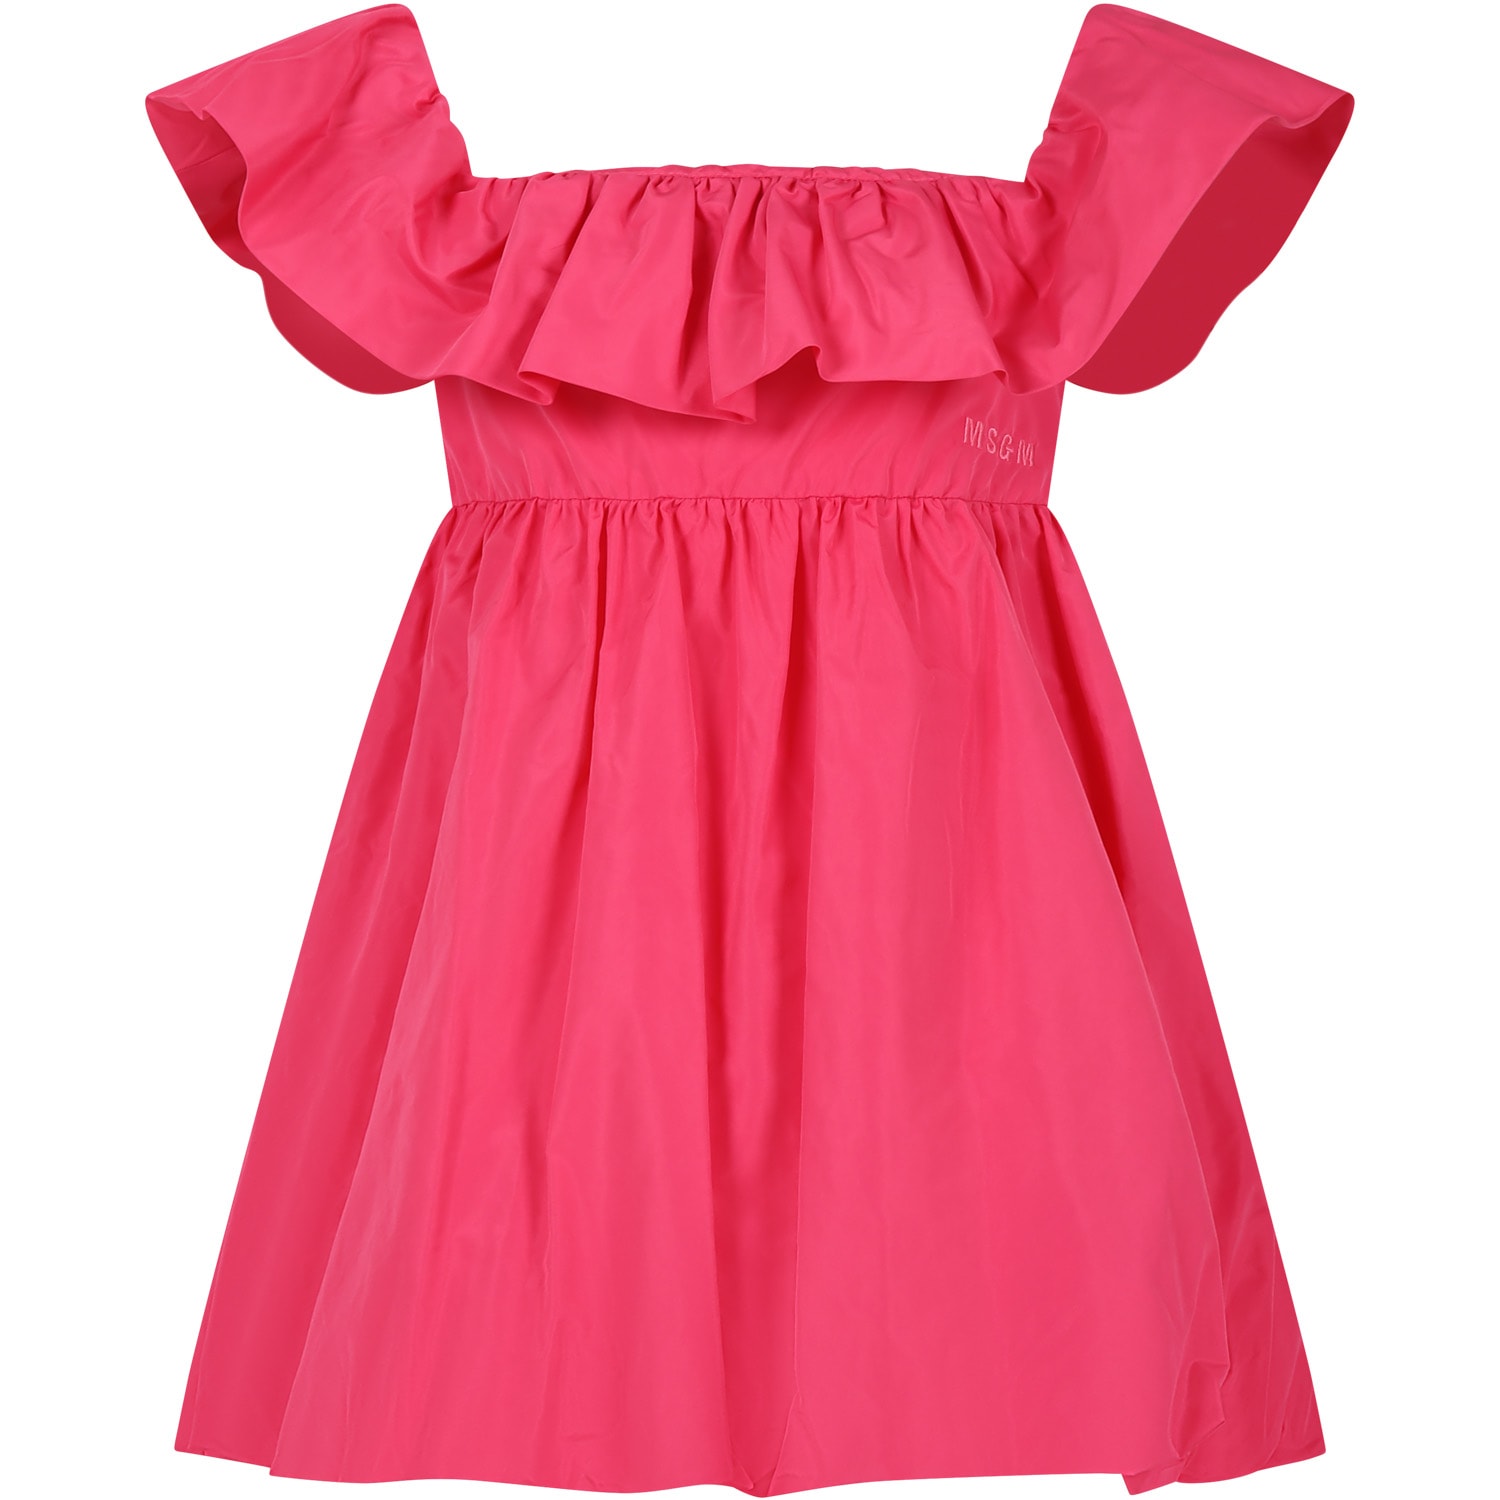 Msgm Kids' Fuchsia Dress For Girl With Ruffles